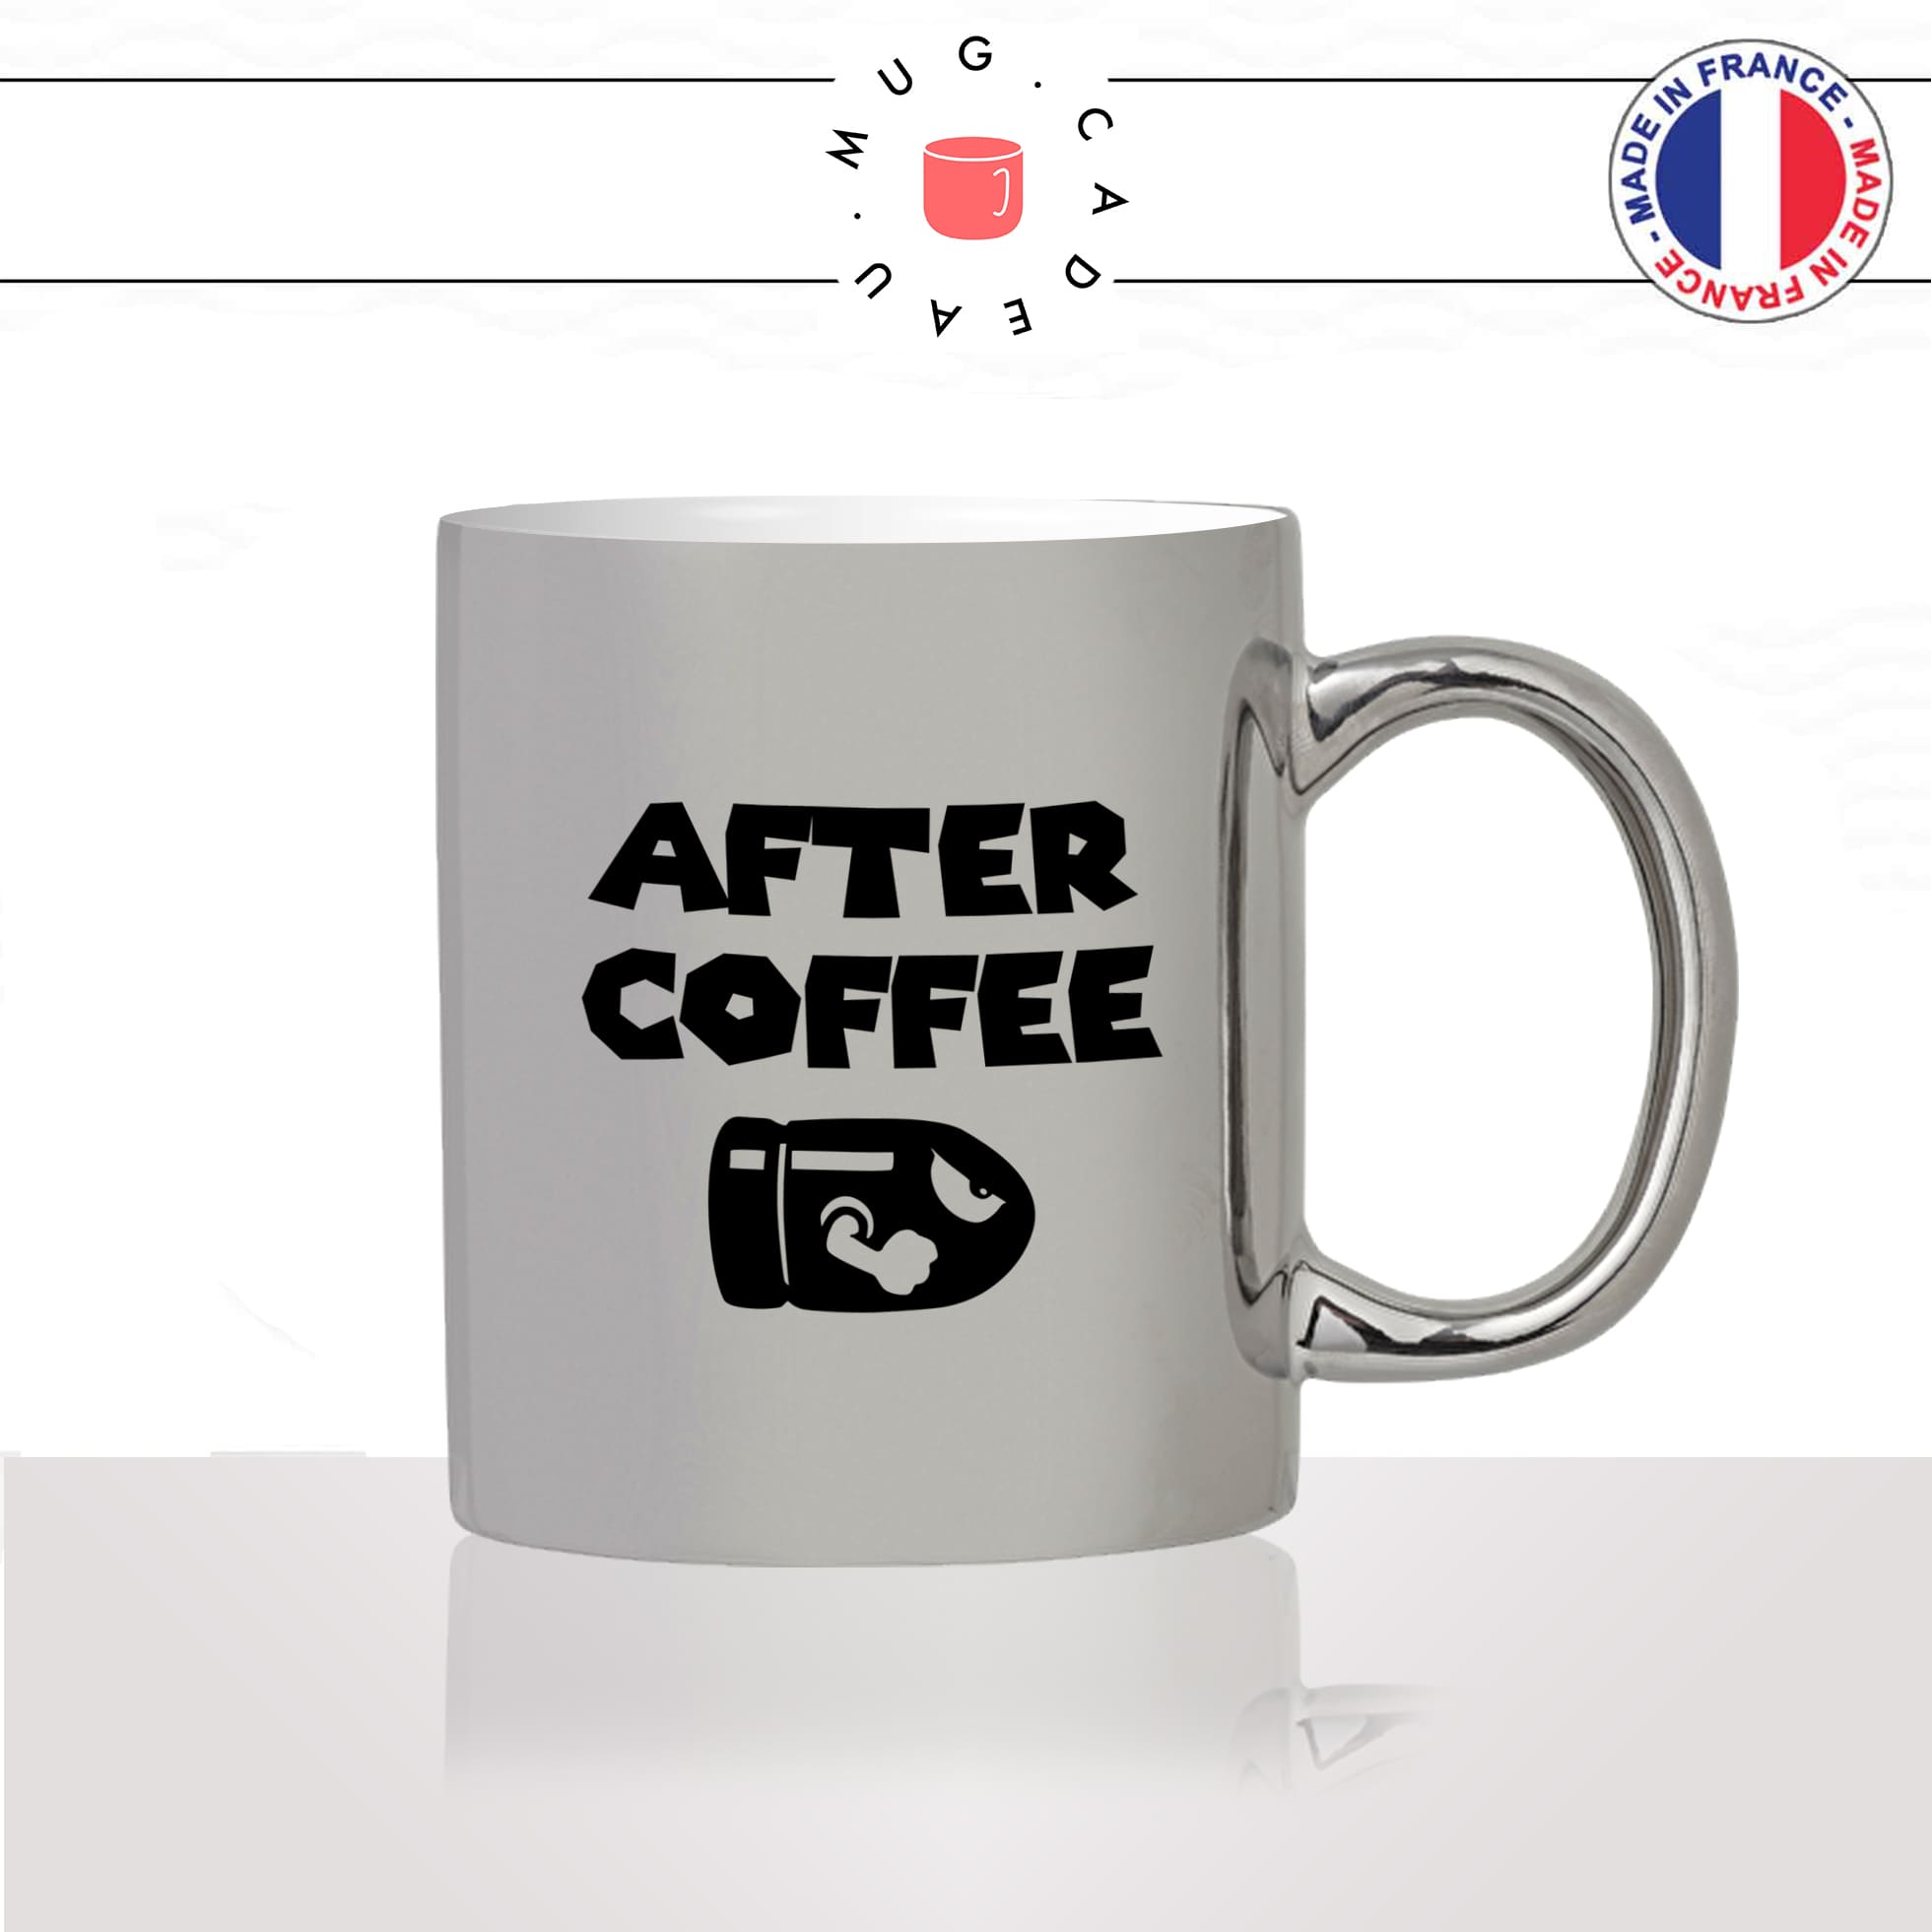 mug-tasse-argent-argenté-silver-after-coffee-bombe-missile-mario-jeux-video-geek-gamer-gaming-console-idée-cadeau-fun-cool-café-thé2